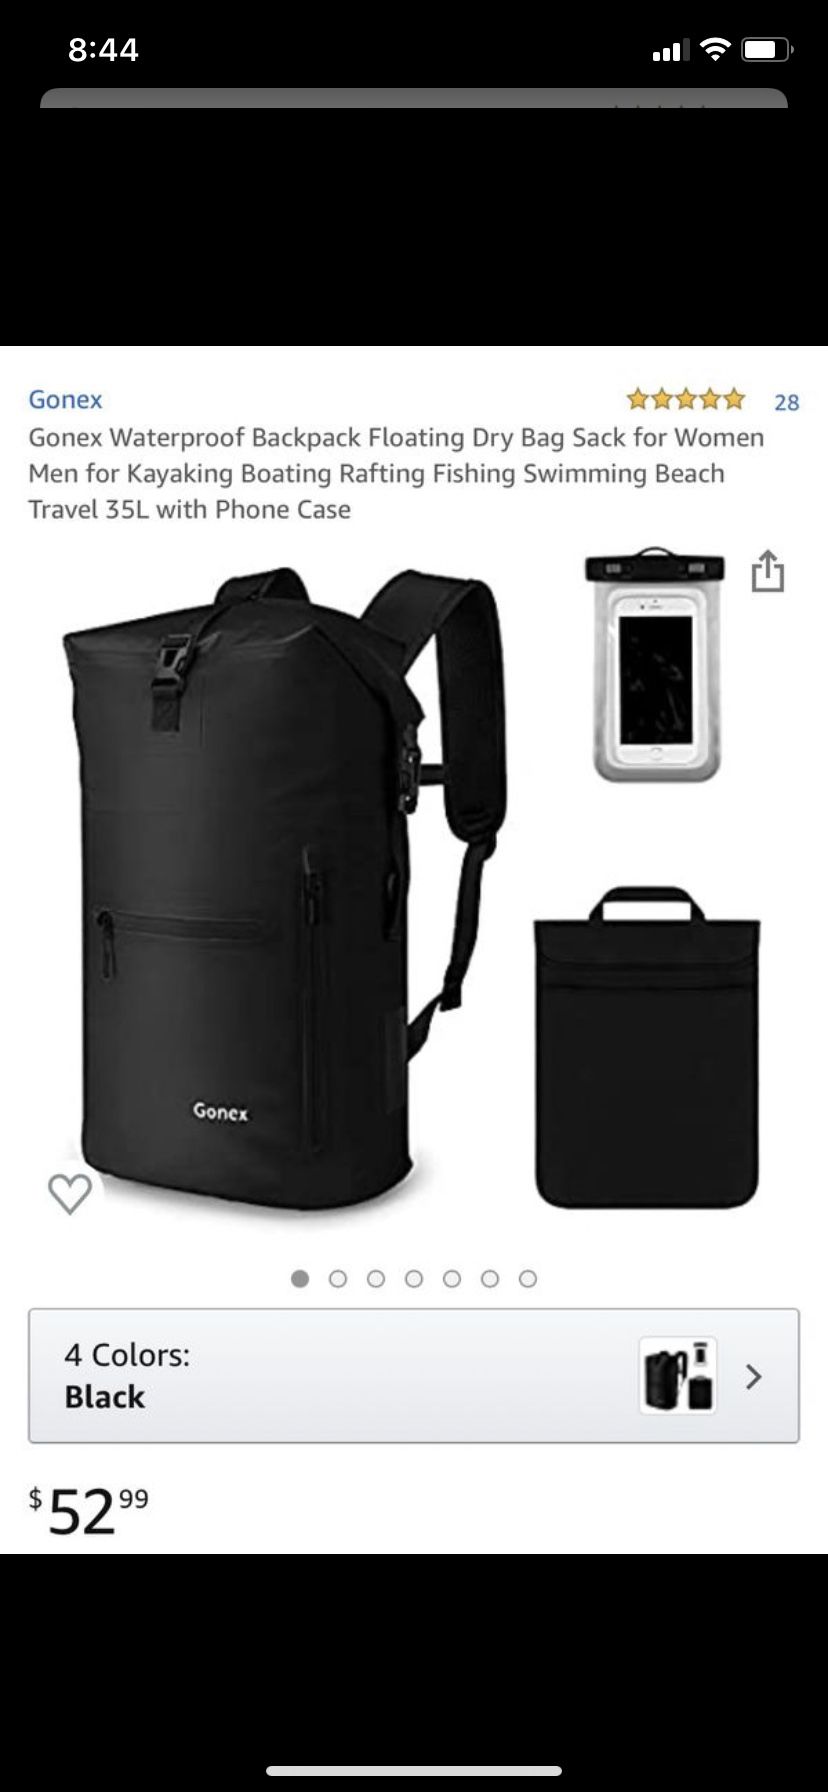 Gonex Waterproof Backpack